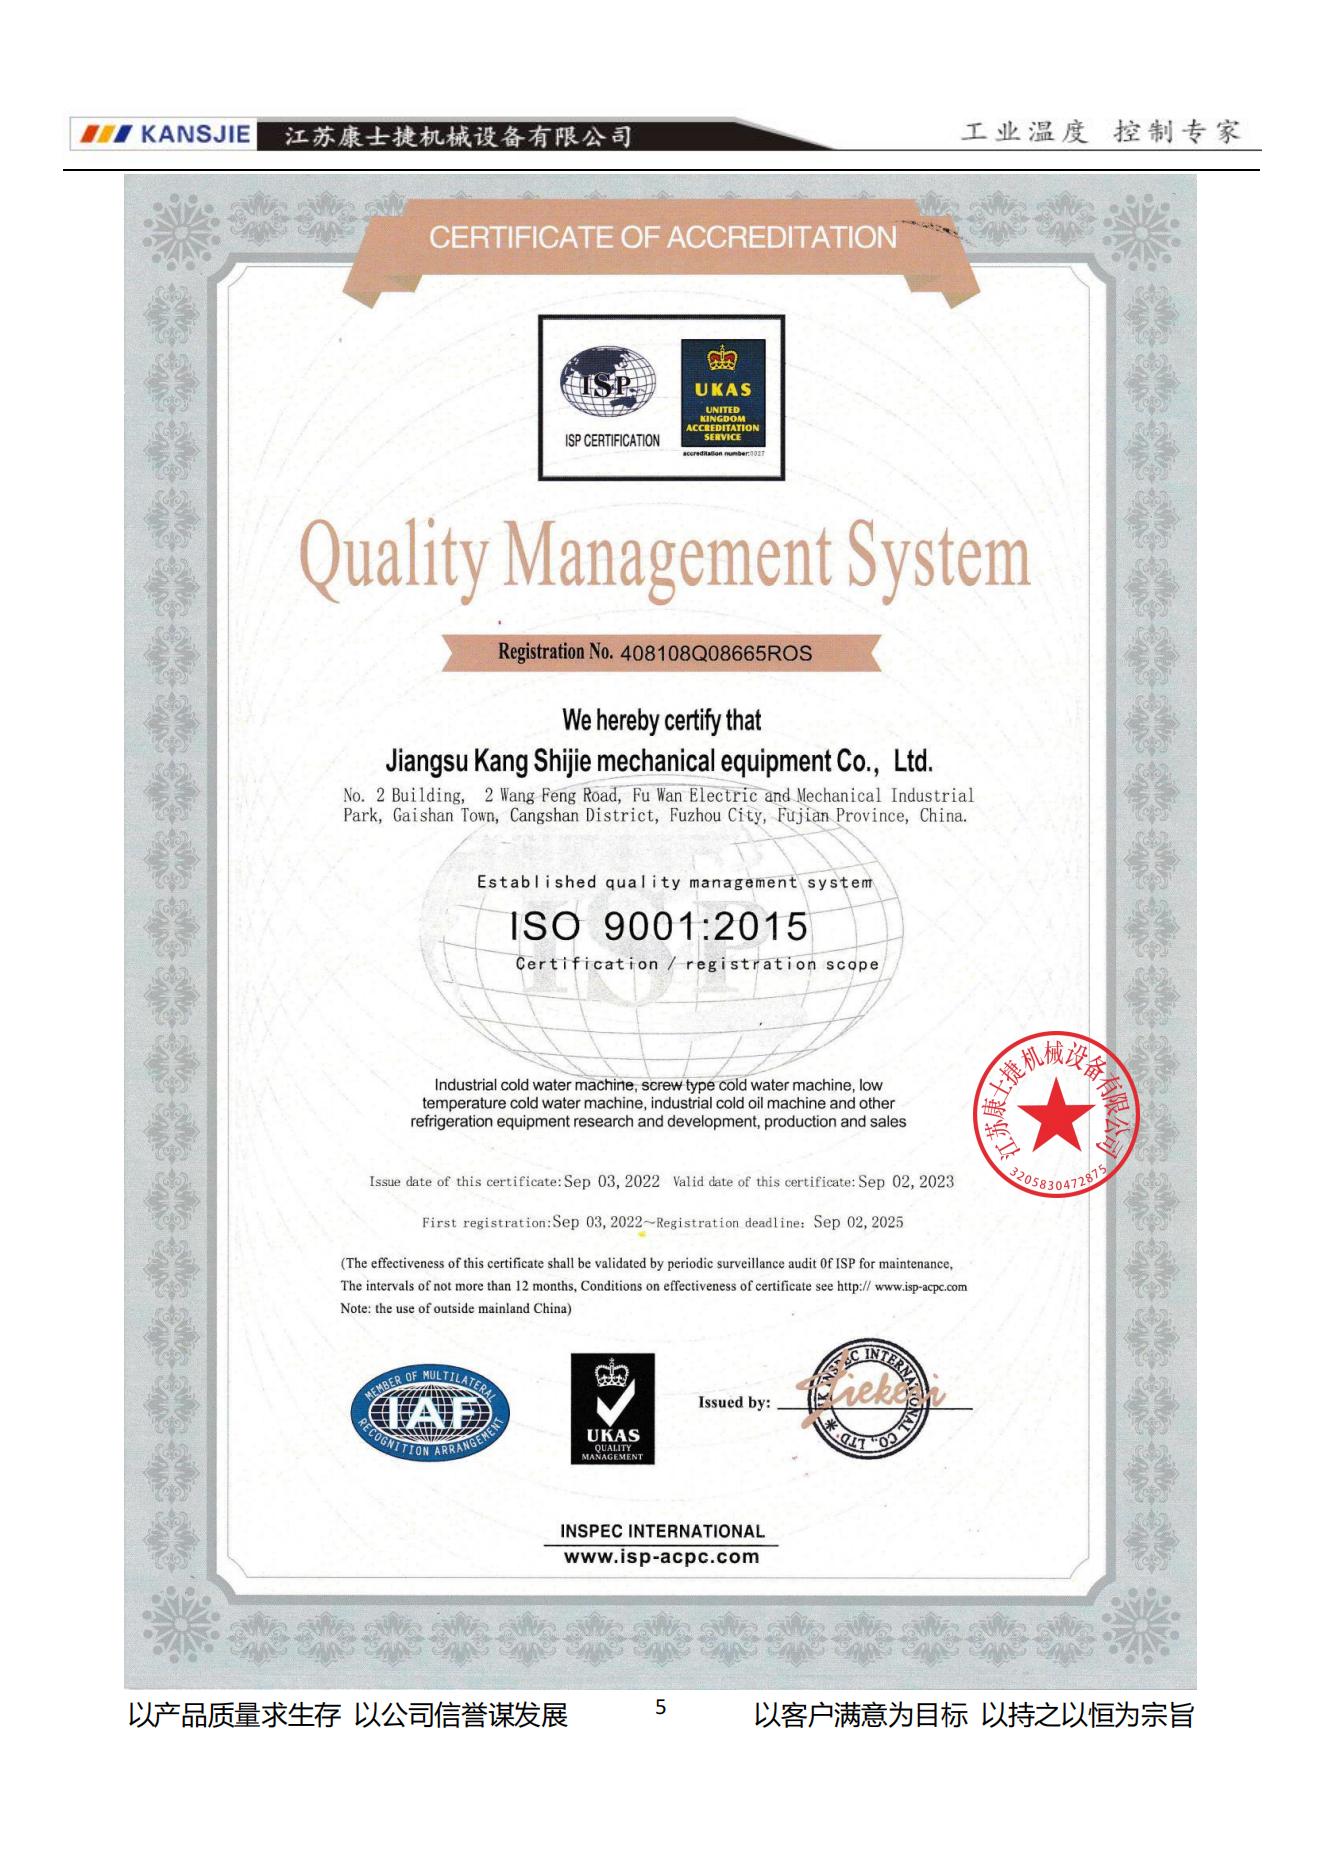 IOS9001质量管理体系证书